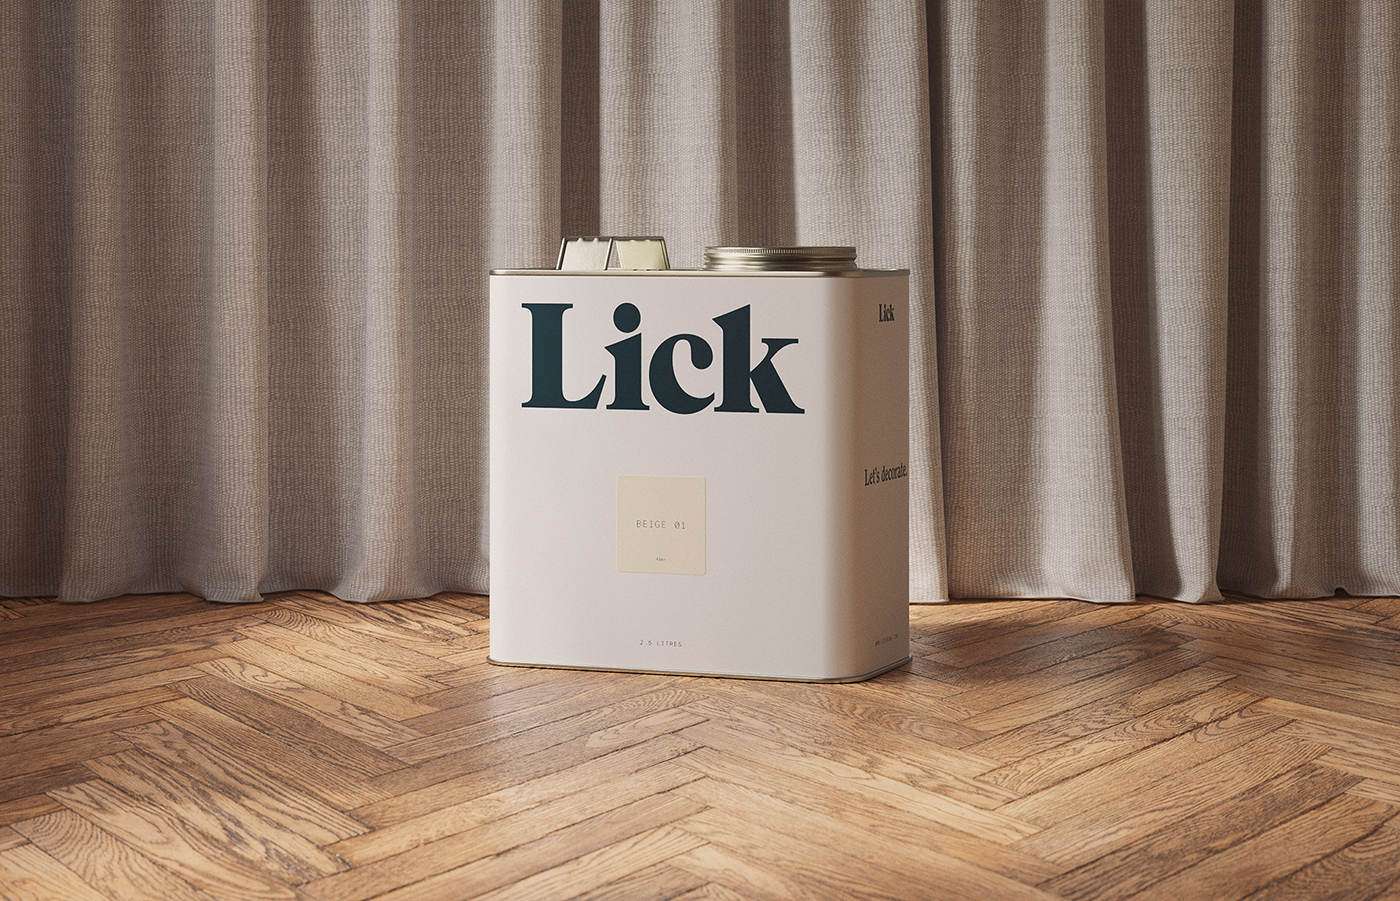 Lick identity